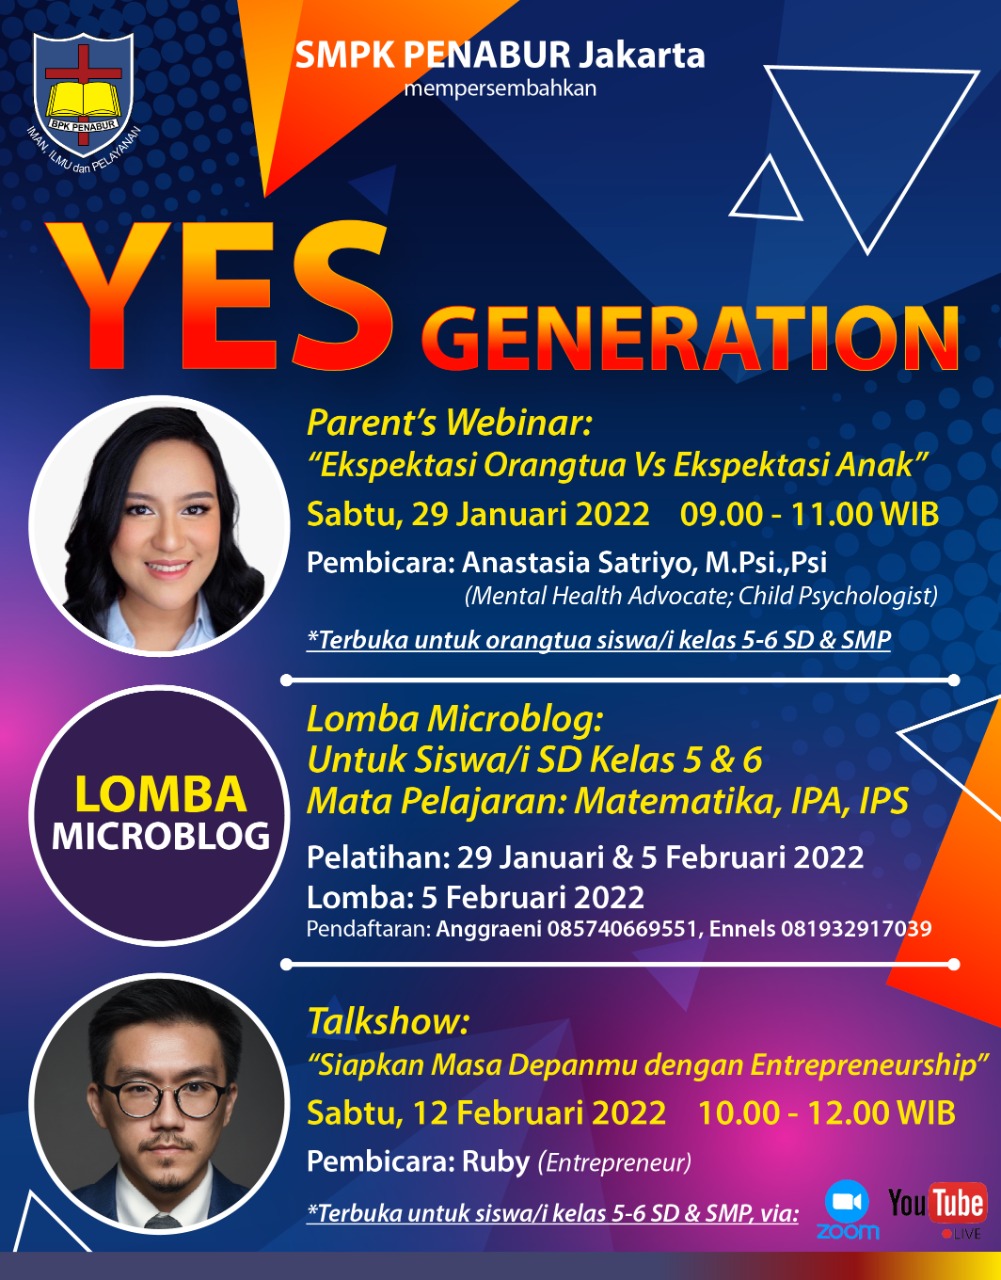 SMPK PENABUR Jakarta Presents YES GENERATION